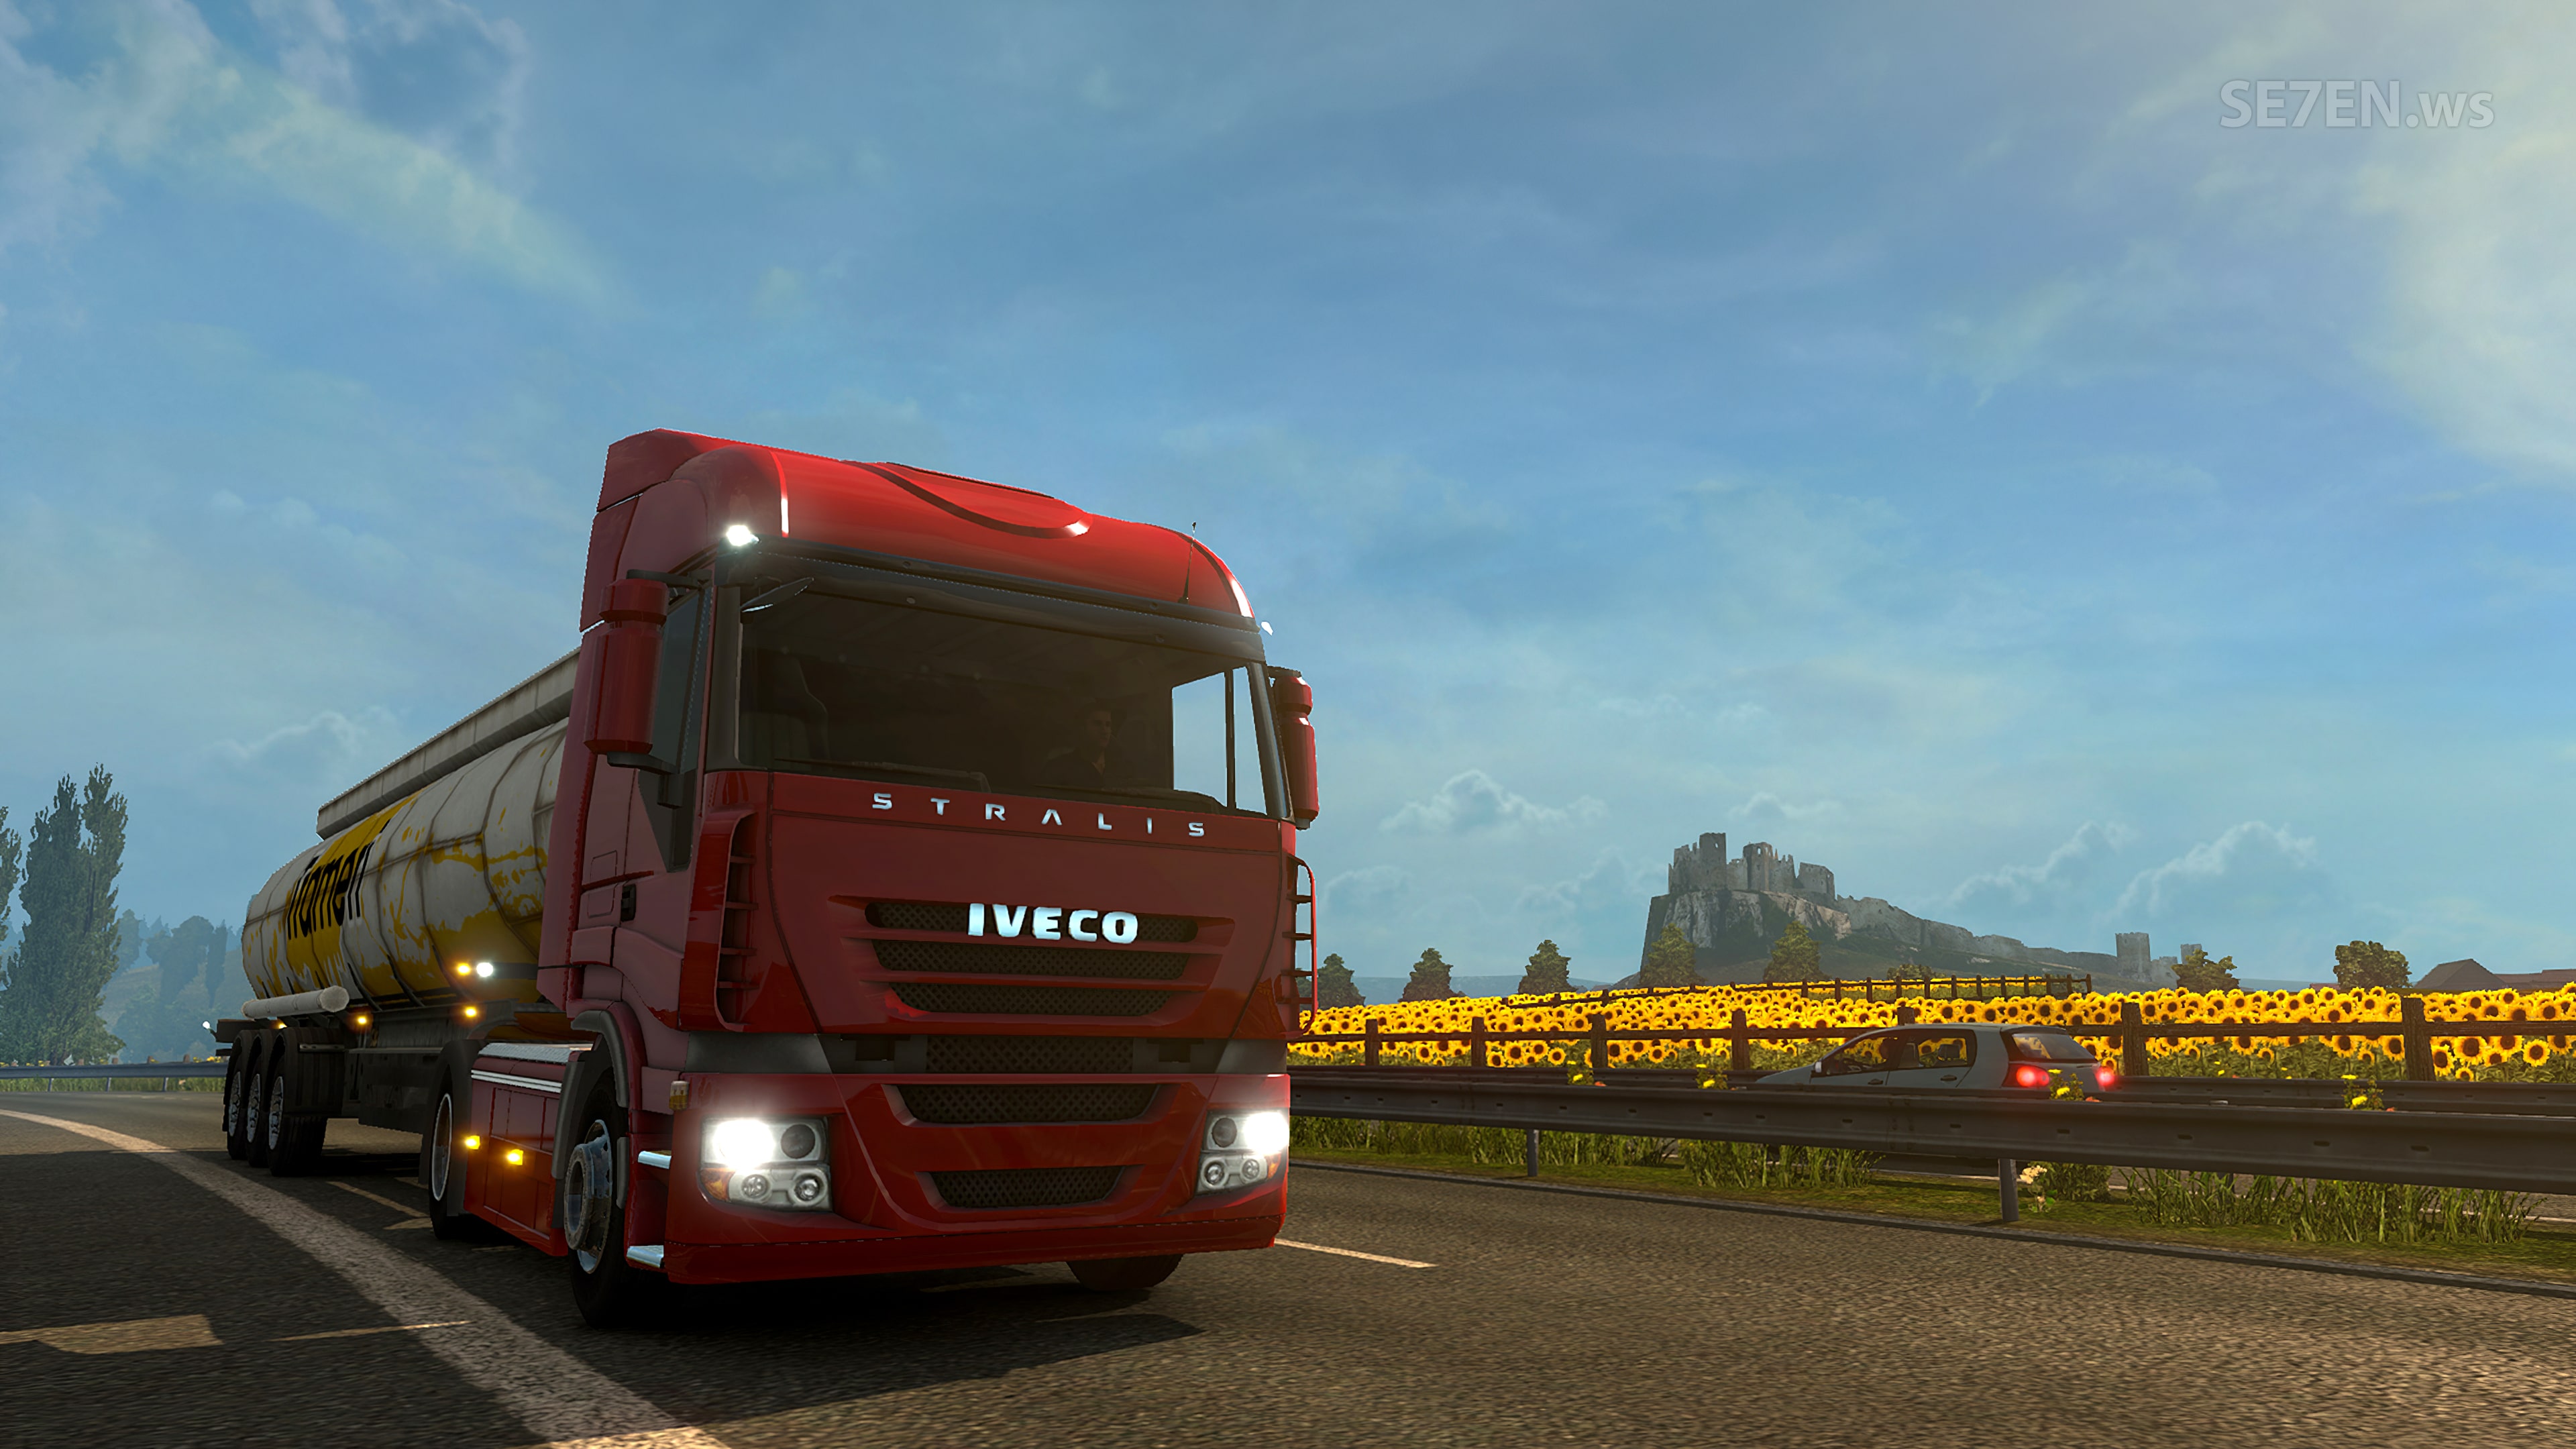 euro truck simulator 2016 free download